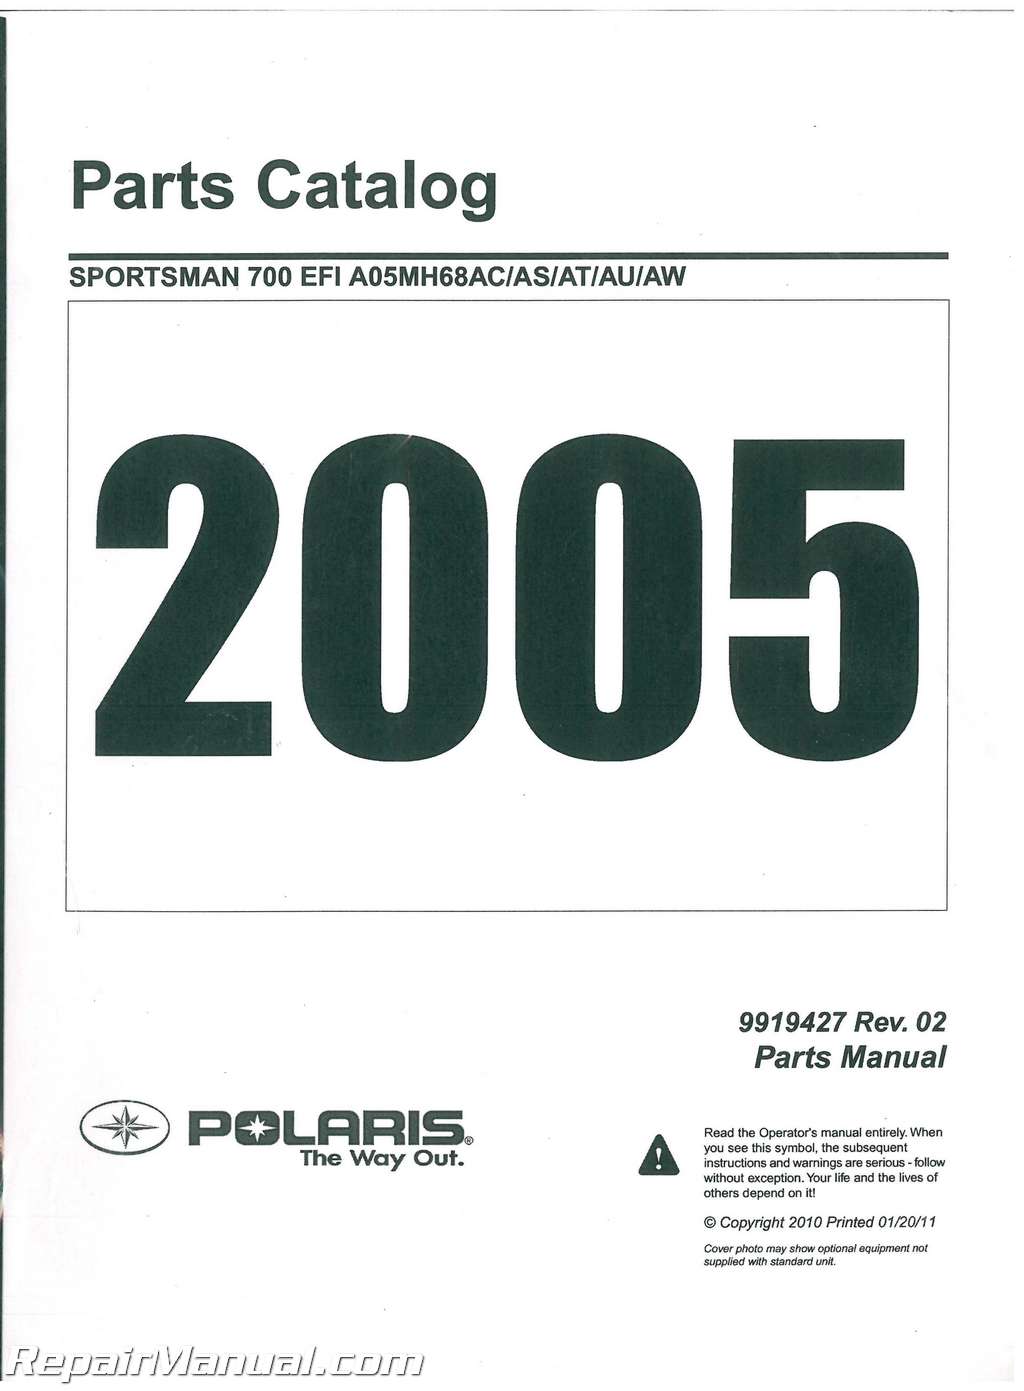 2005 Polaris Sportsman 700 Twin Efi